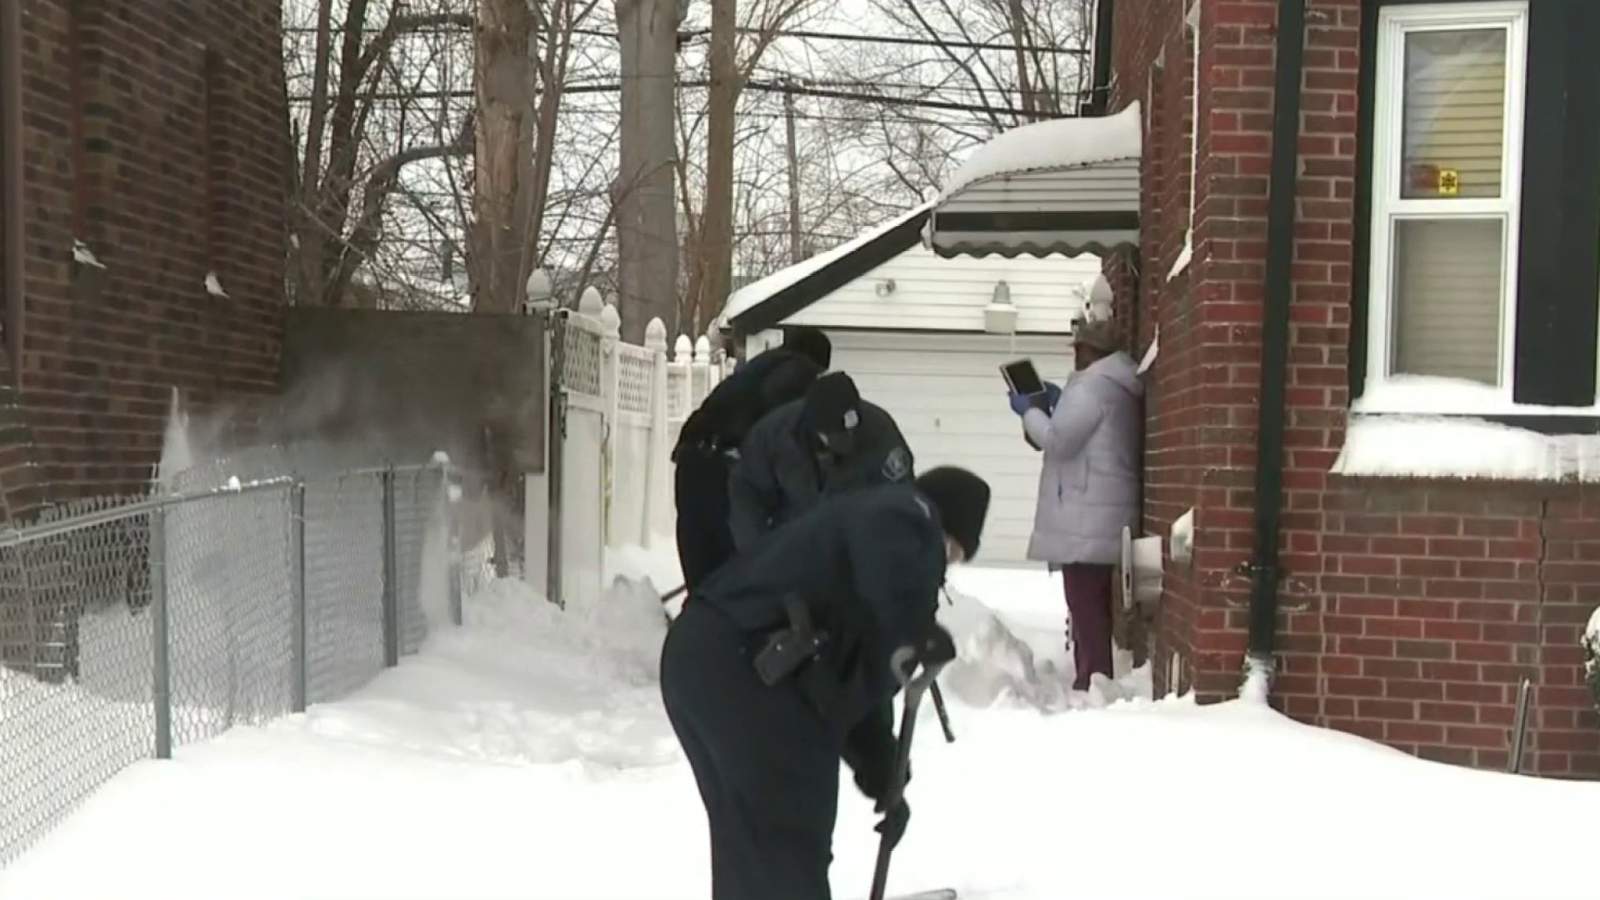 Detroit officers help seniors shovel snow after winter storm